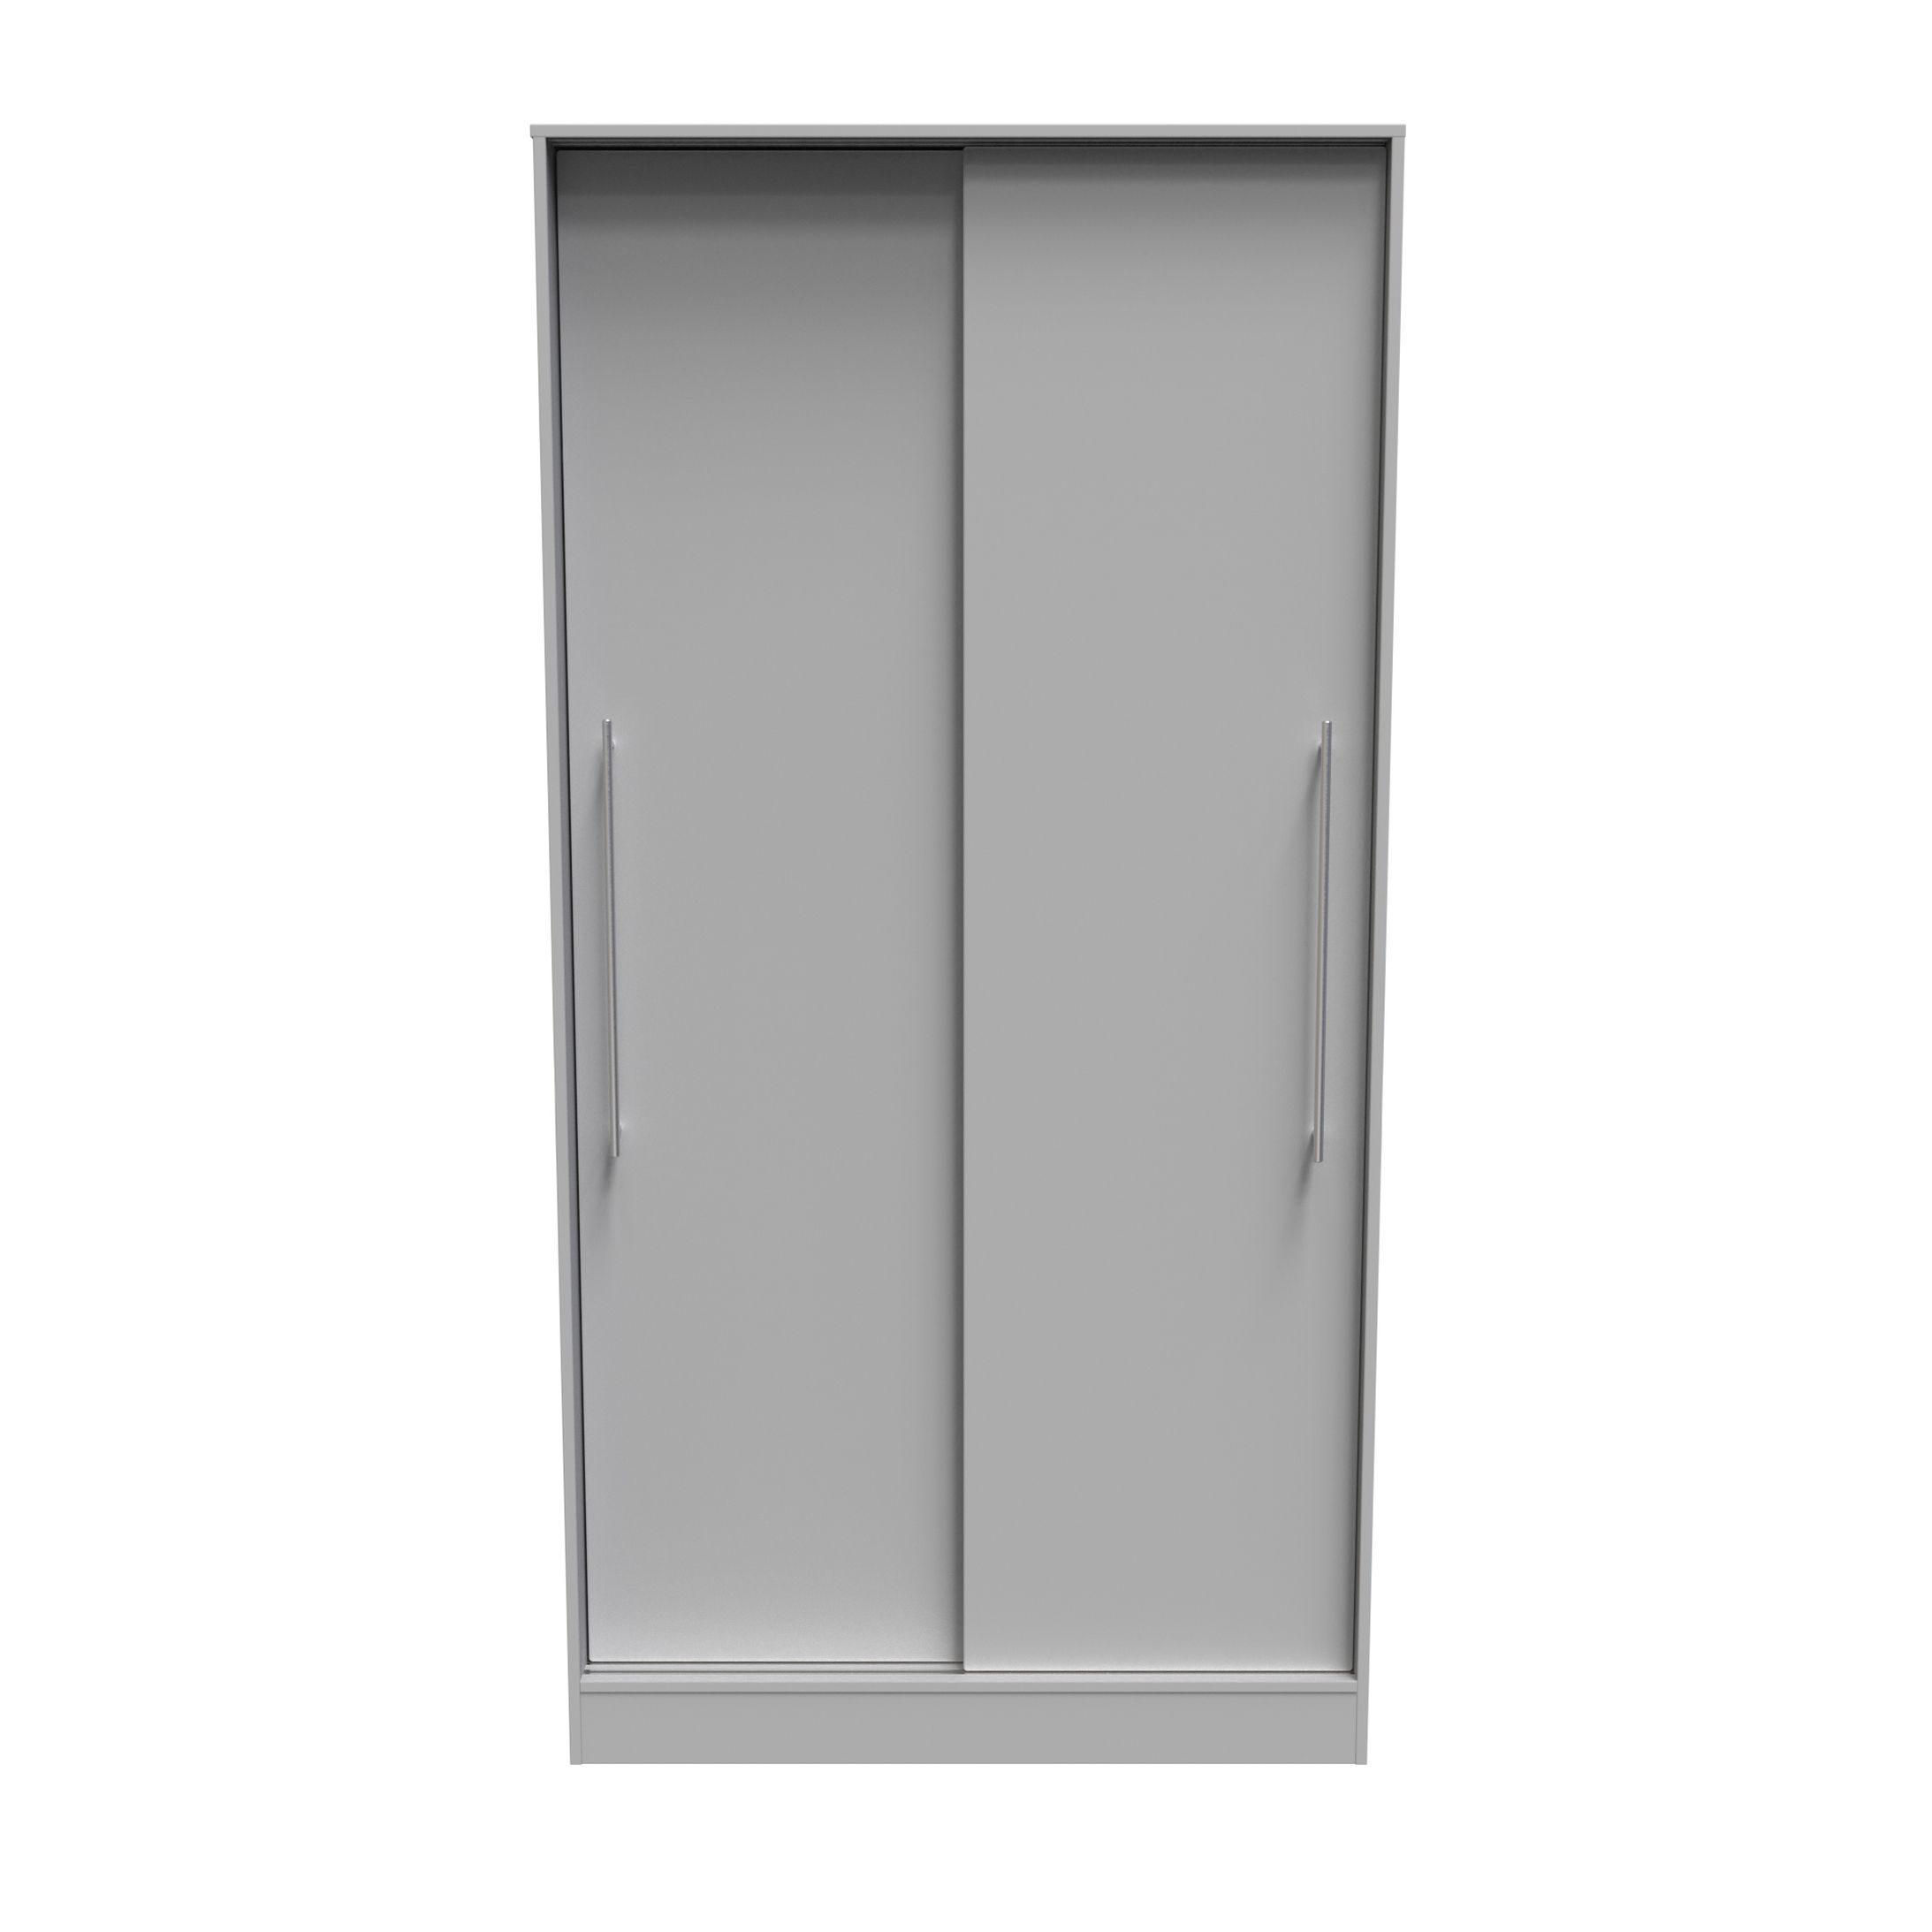 Sherwood Contemporary Grey matt Double Sliding door wardrobe (H)1975mm (W)1005mm (D)600mm